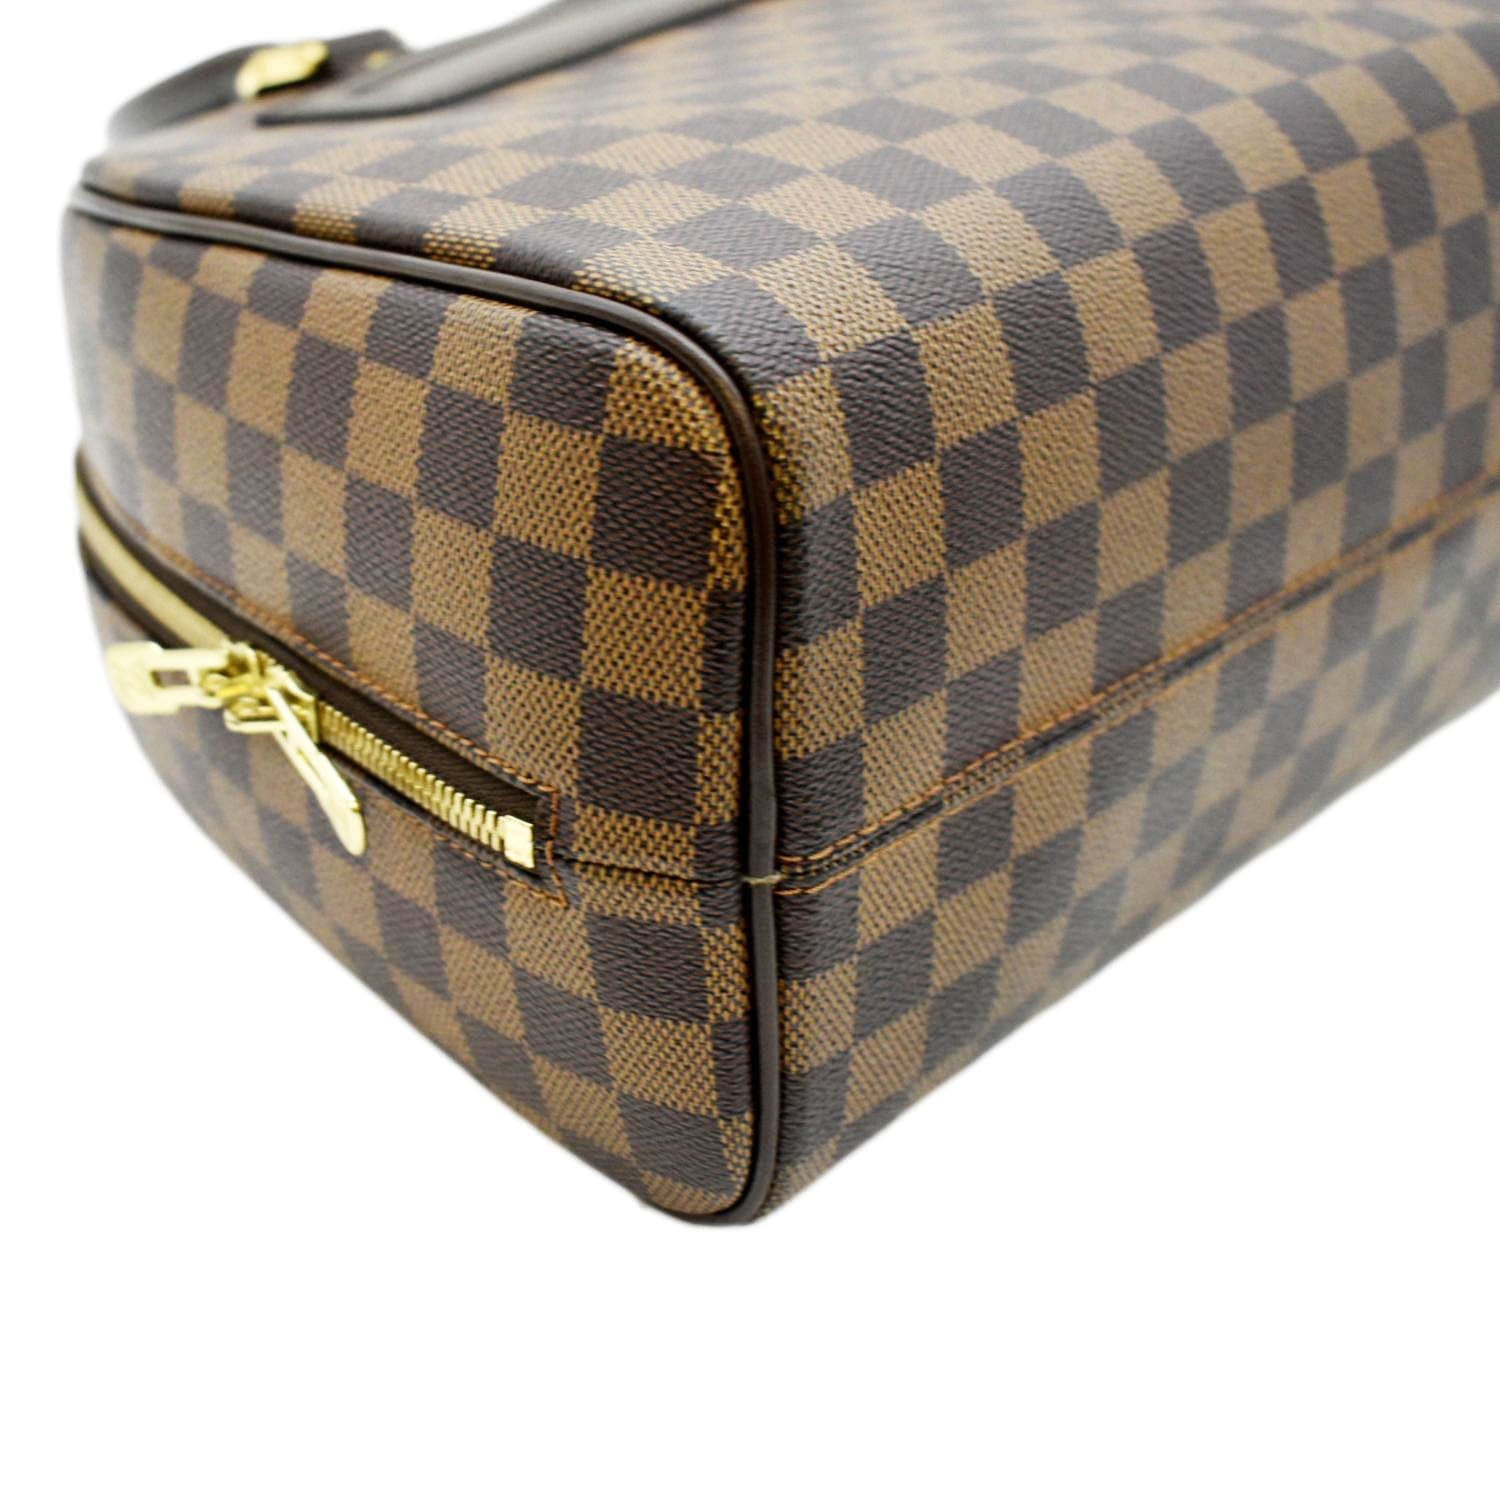 ❤️SOLD❤️LV bag Louis Vuitton handbag damier Nolita  Louis vuitton, Louis  vuitton handbags, Louis vuitton satchel